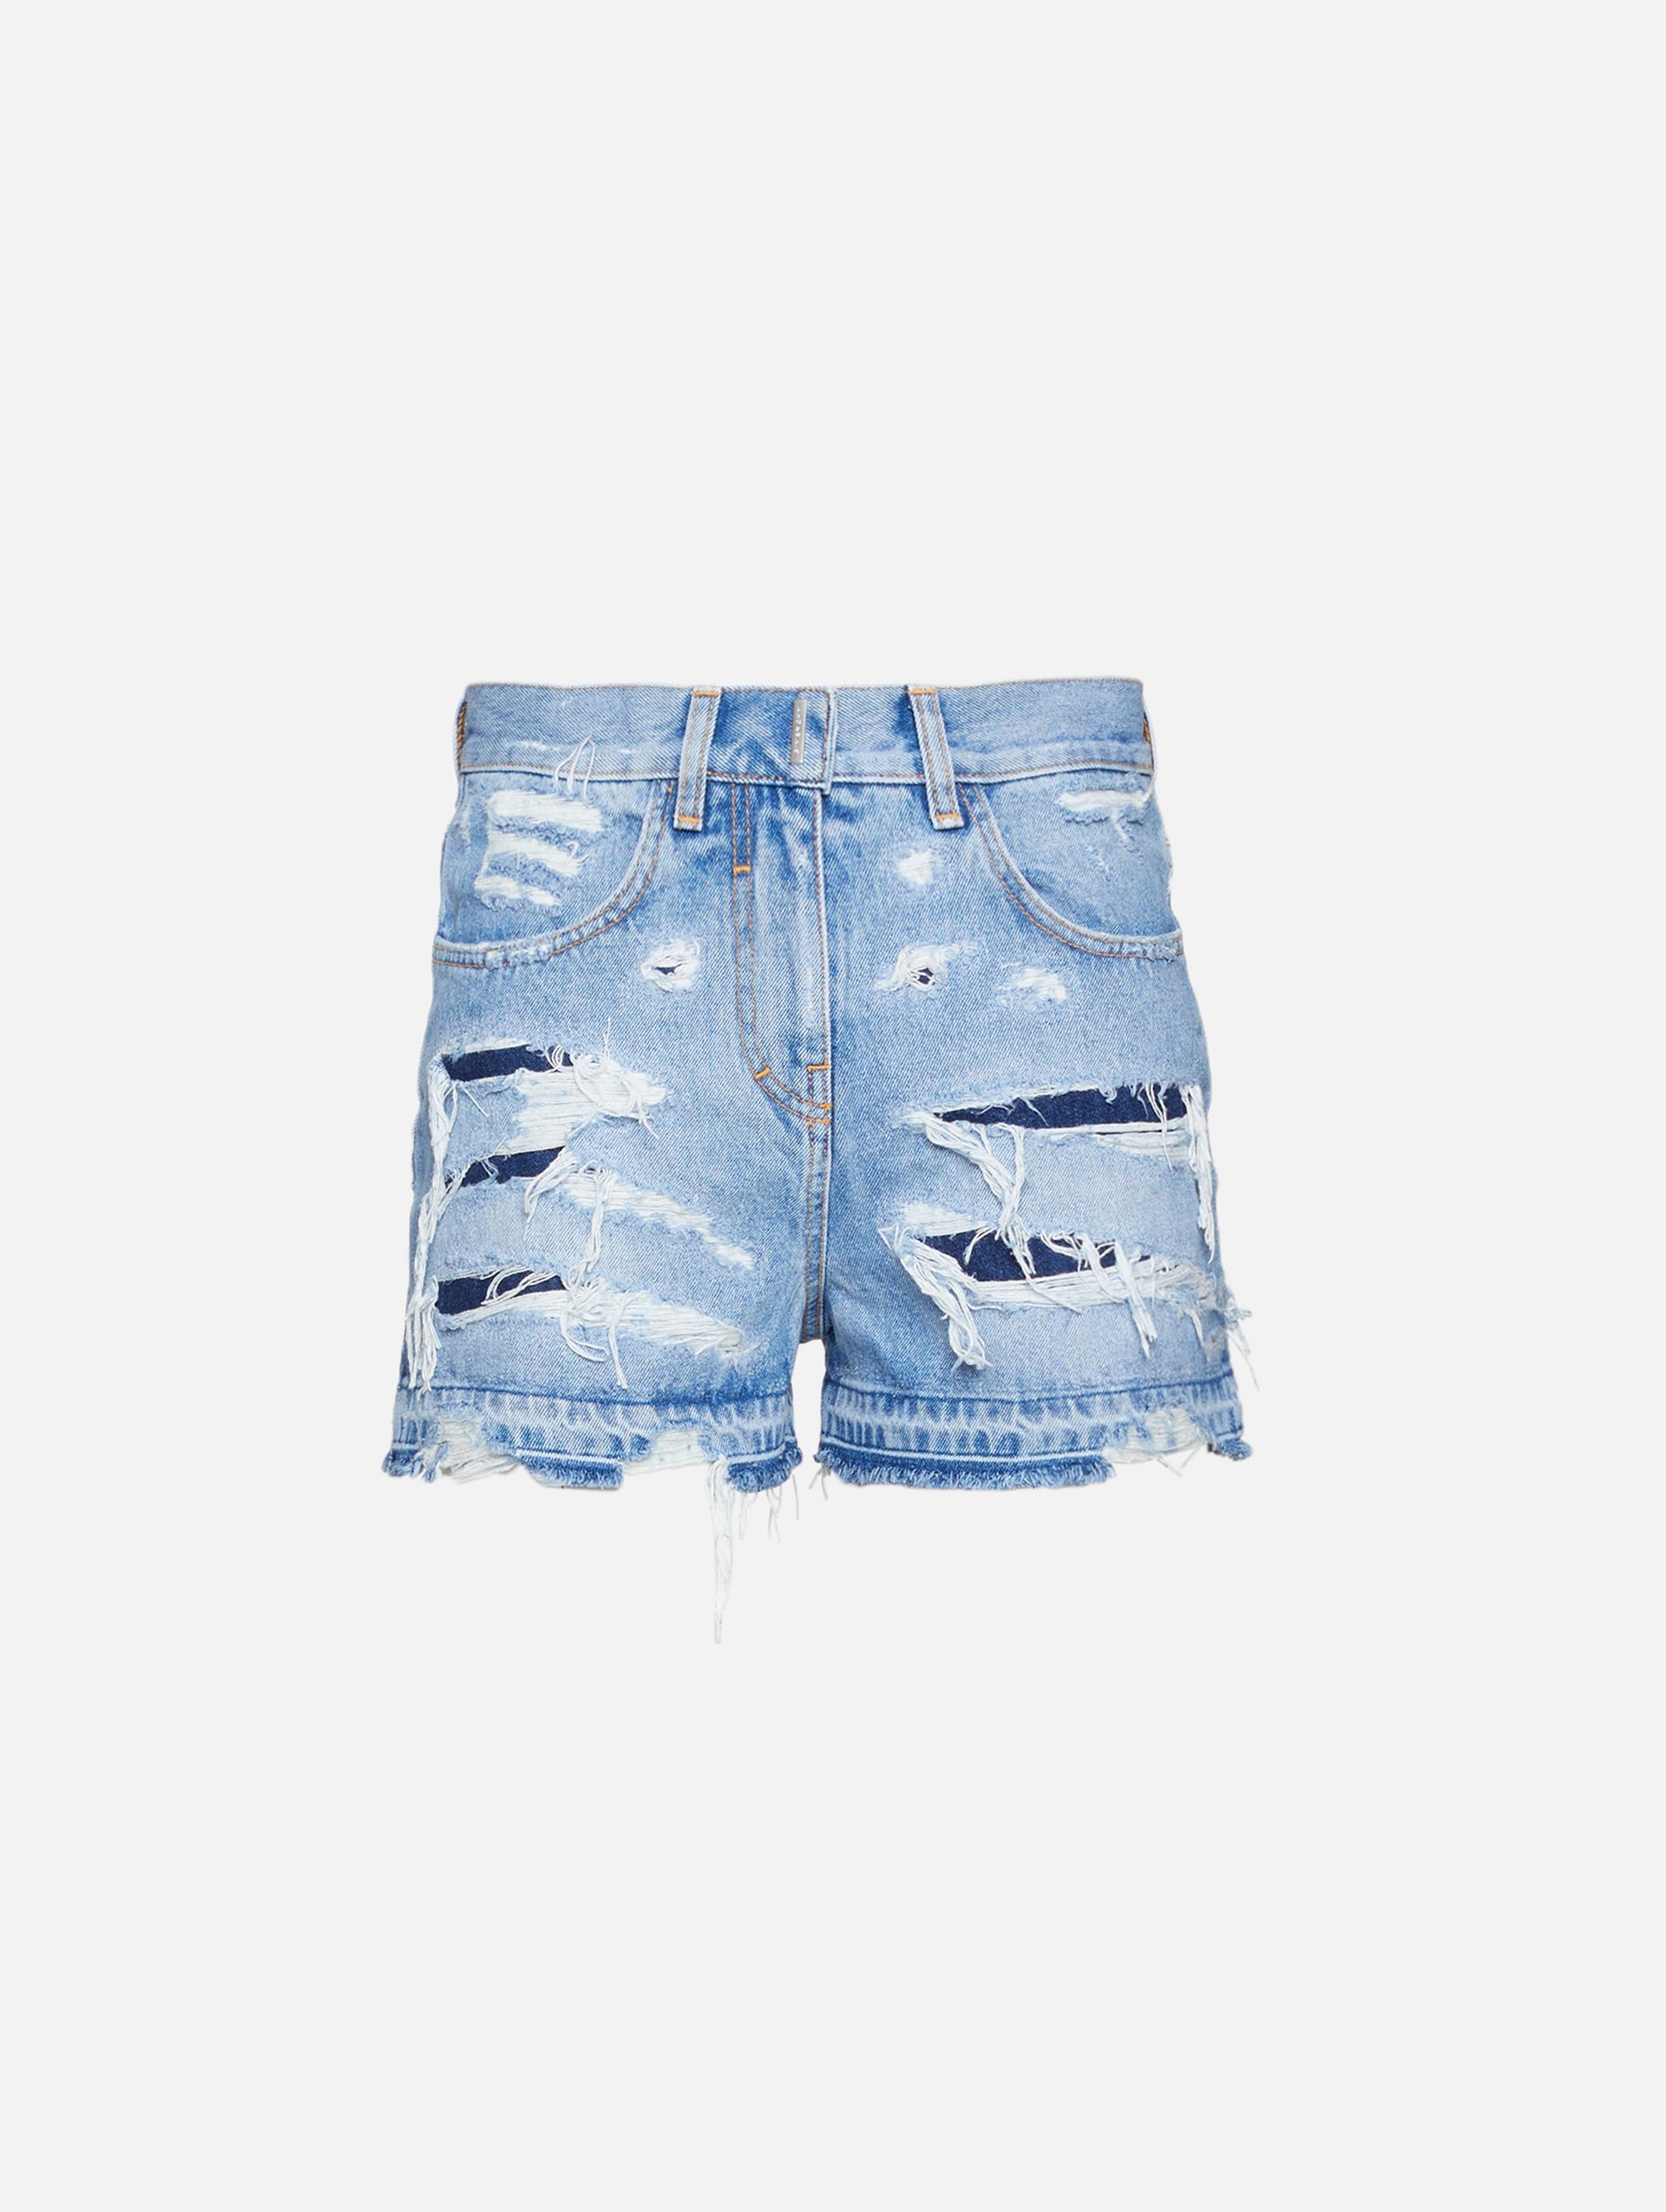 Buy DISOLVE Denim Shorts for Women High Waist Button Denim Jean Shorts (L)  at Amazon.in